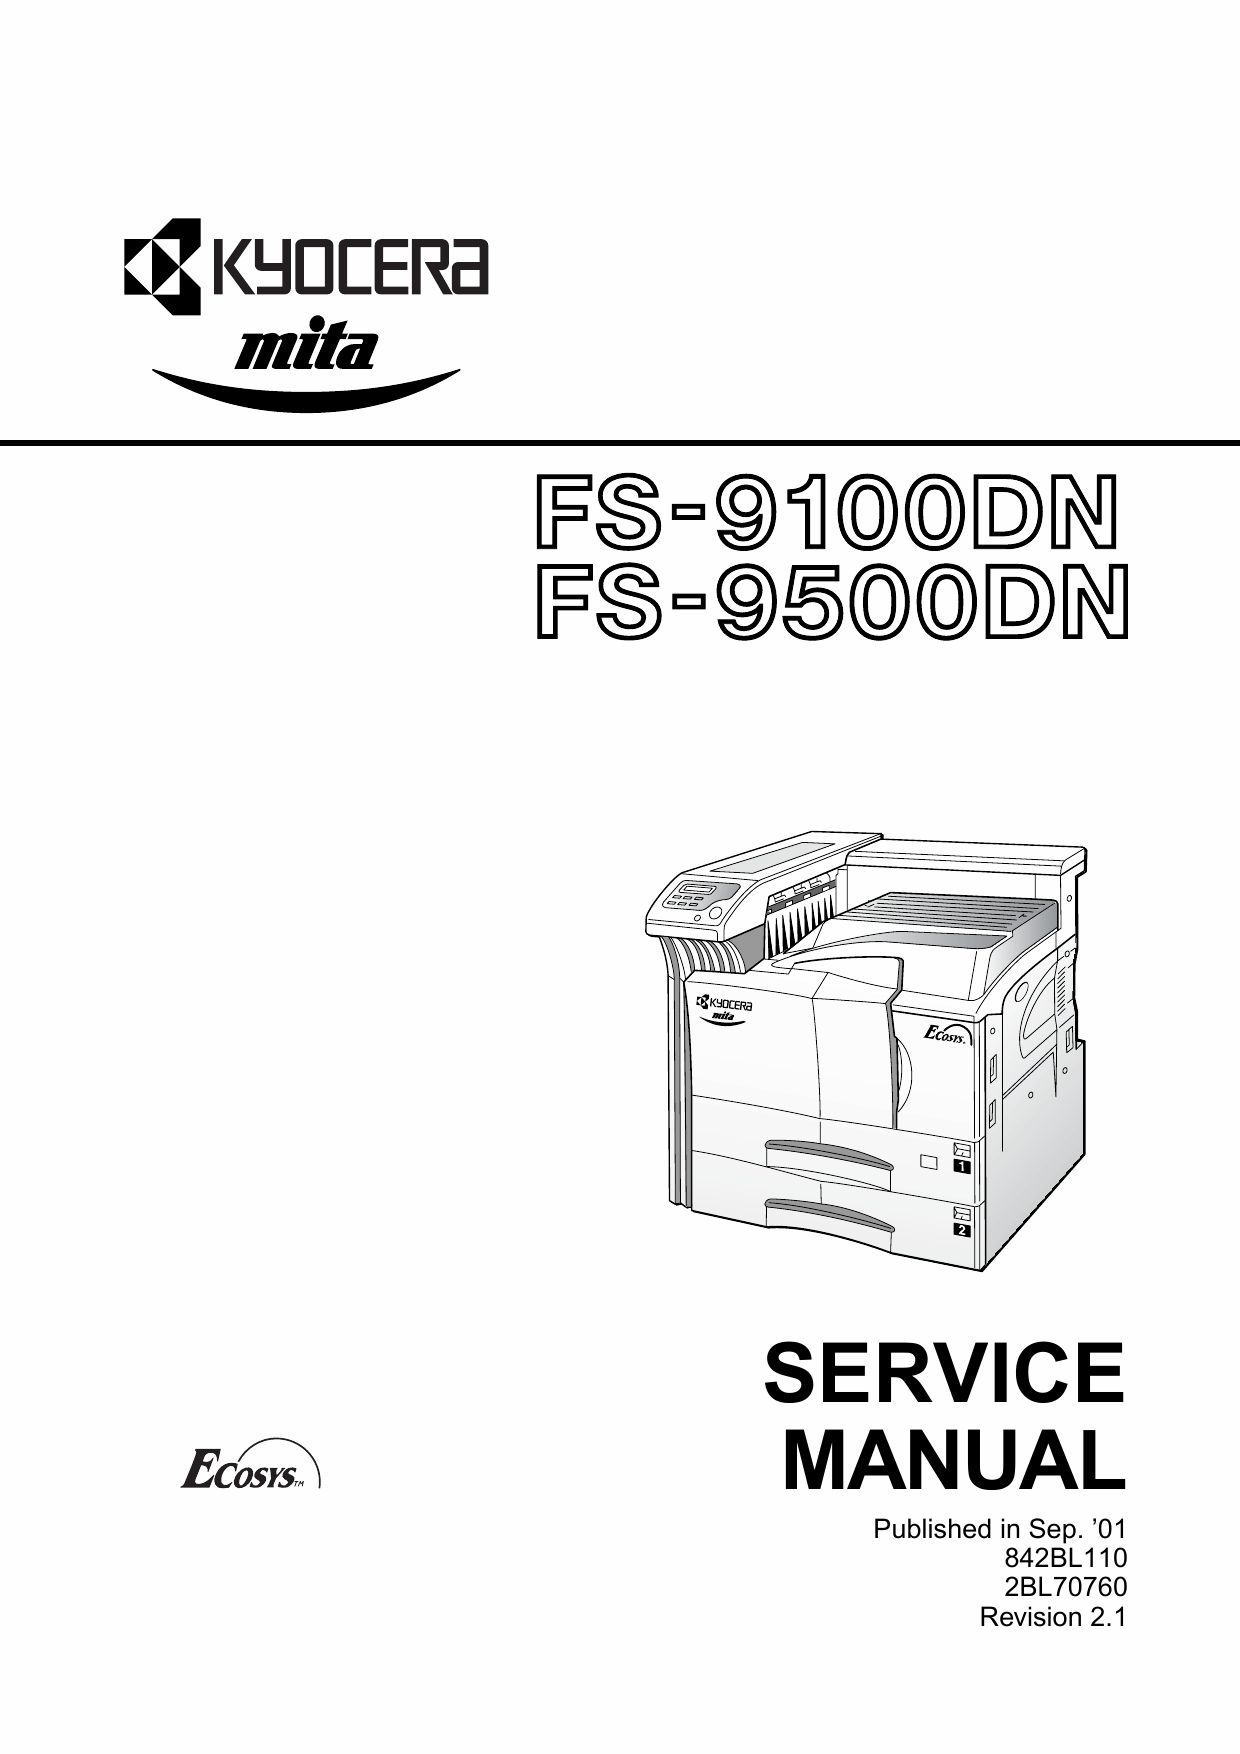 Kyocera service manual. Kyocera 3500 service manual. 9500dn. Куосера 4501 сервис мануал. Куосера FS 4200 сервис мануал.